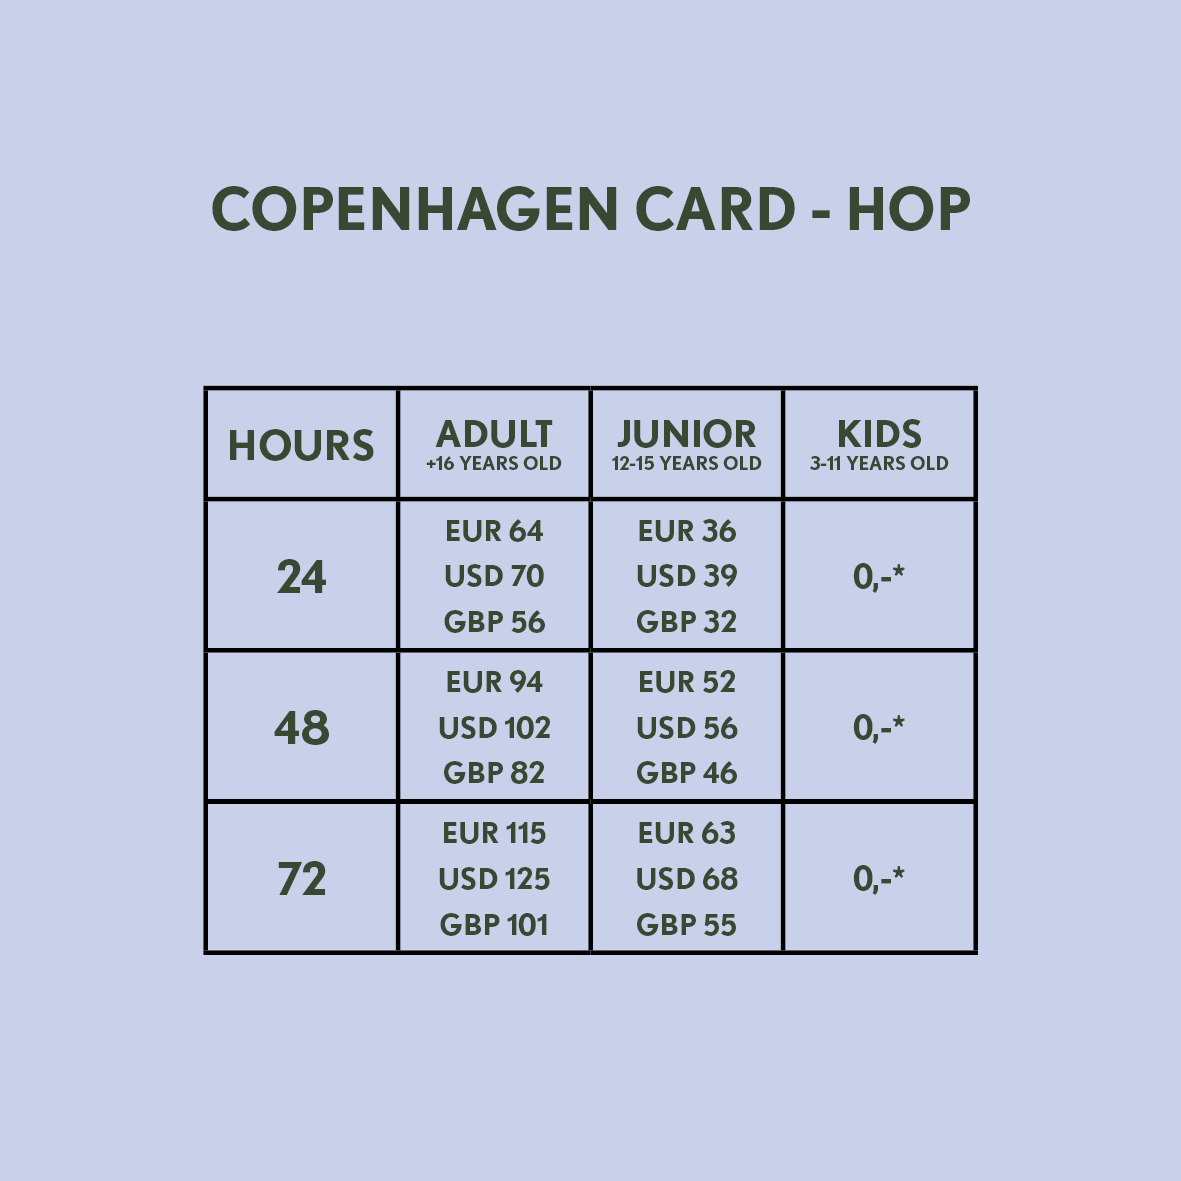 Price overview for Copenhagen Card HOP